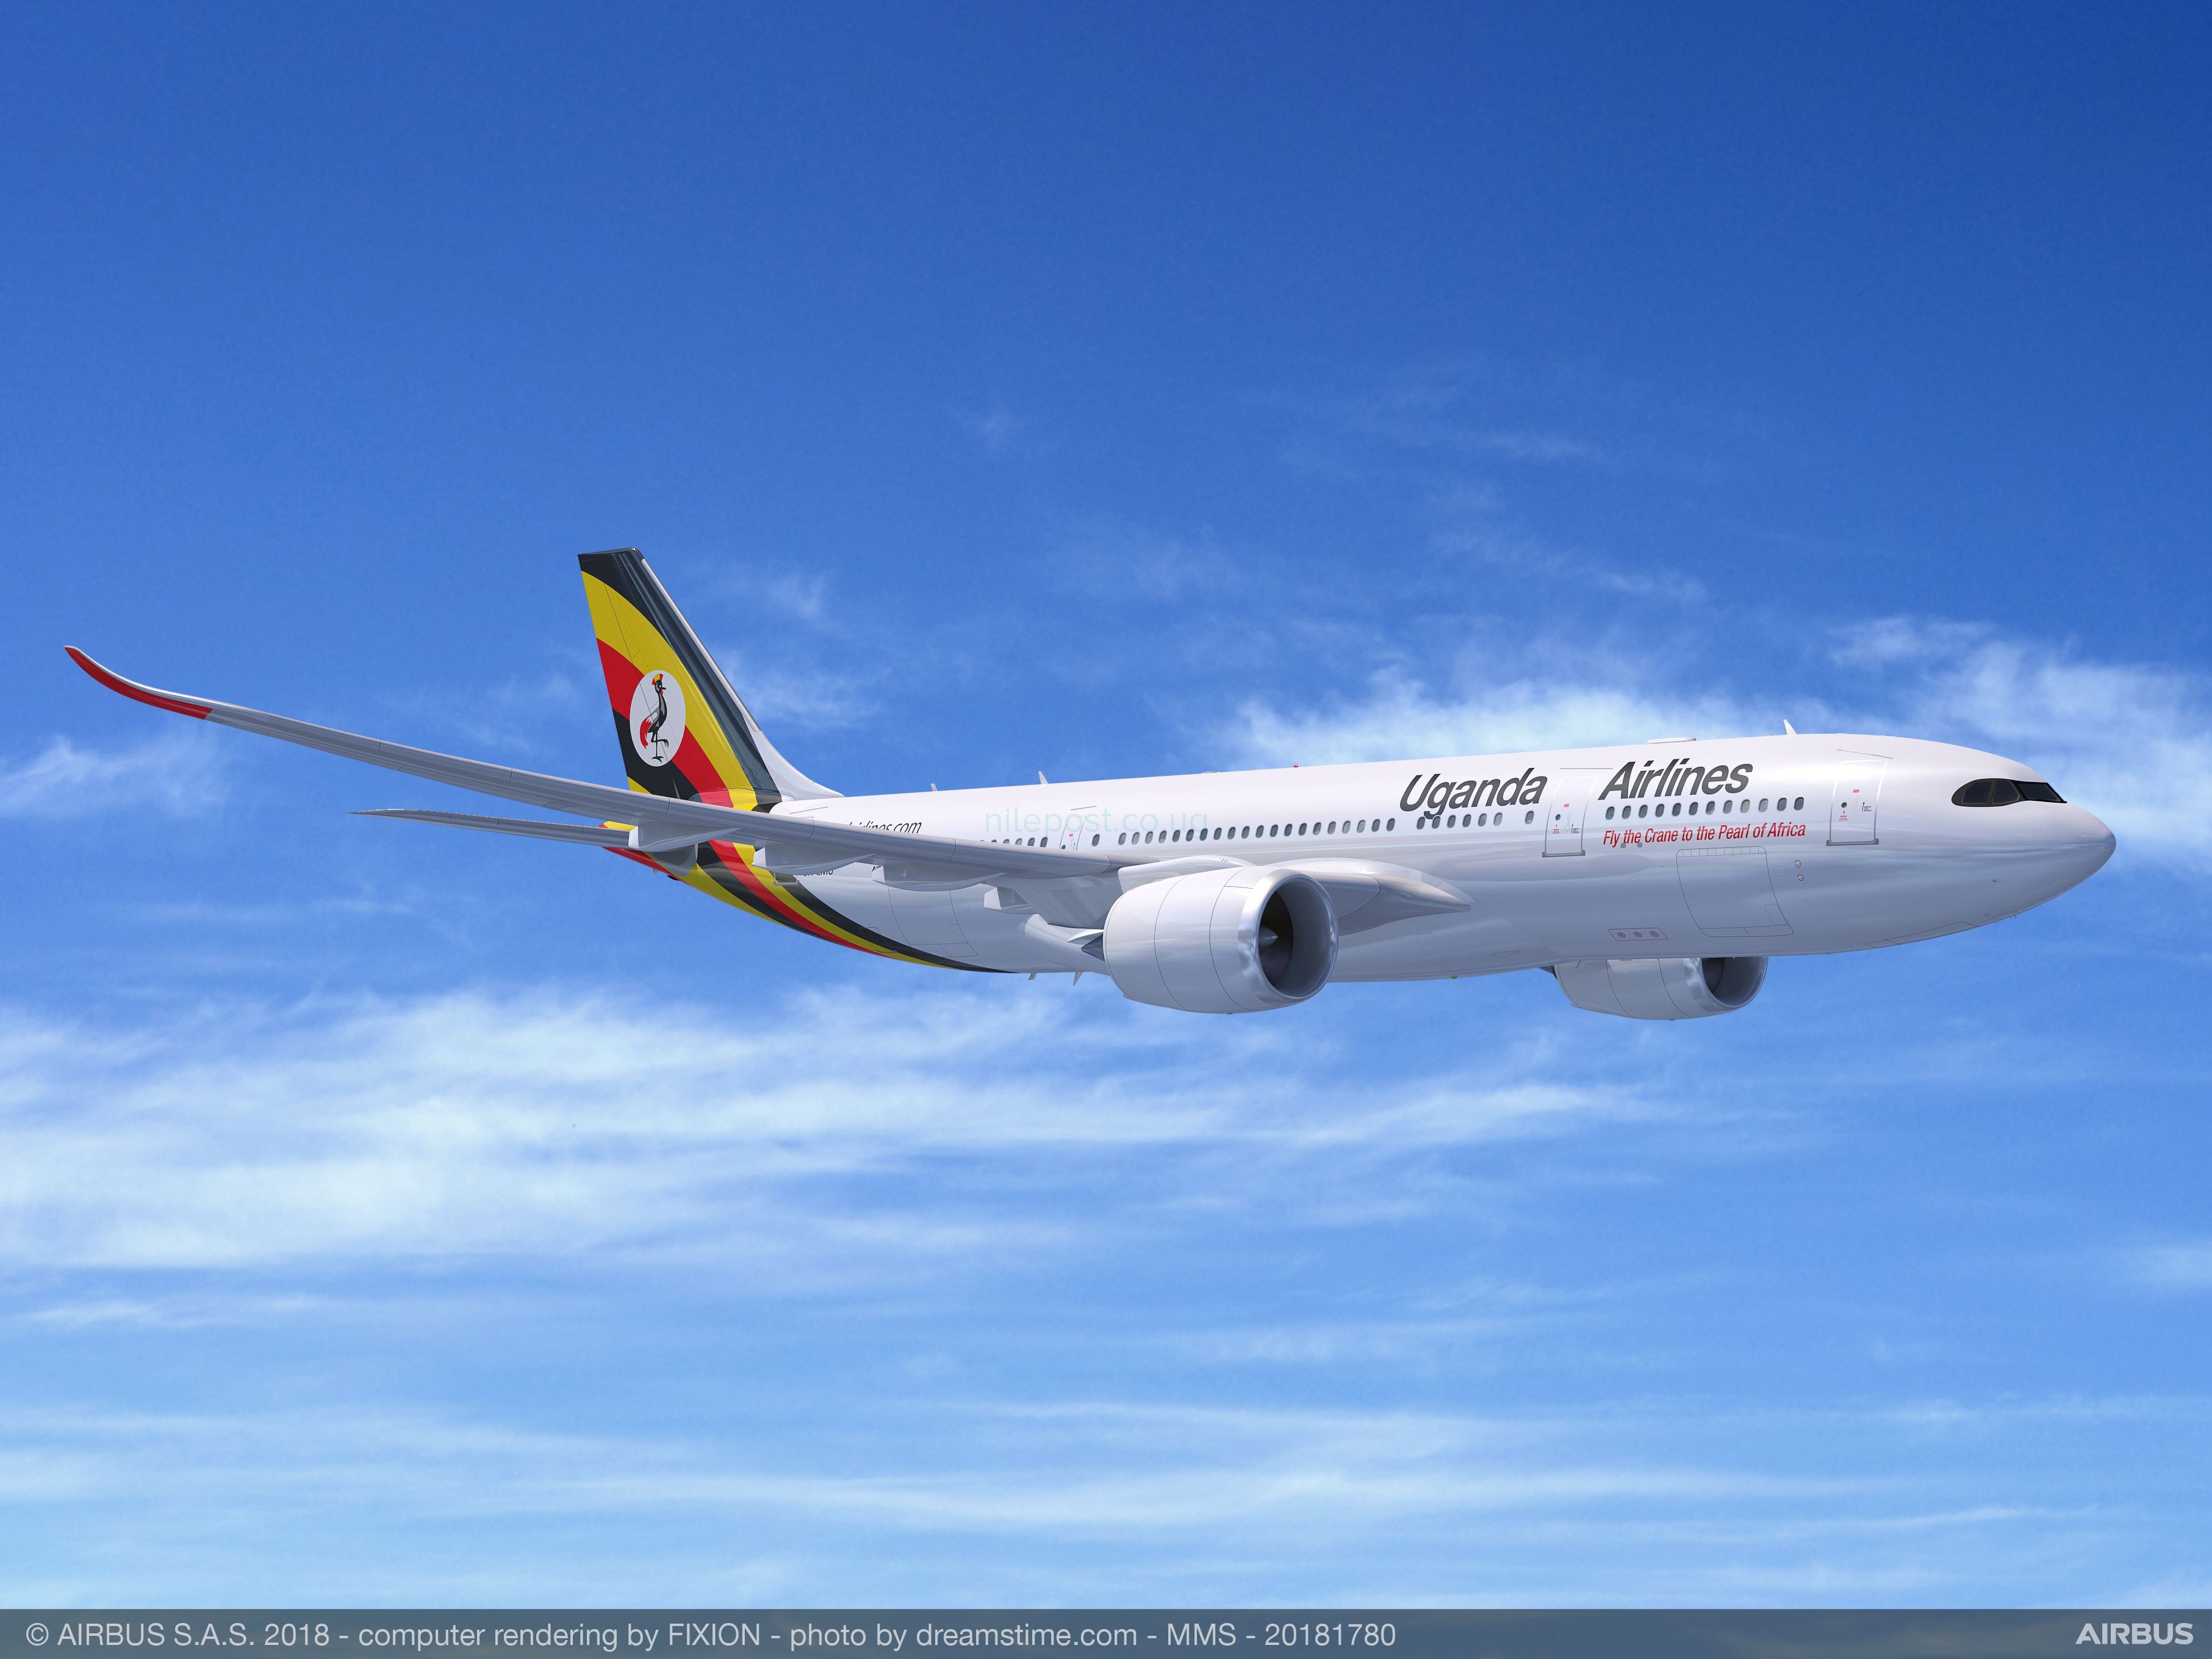 Image result for airbus plane uganda